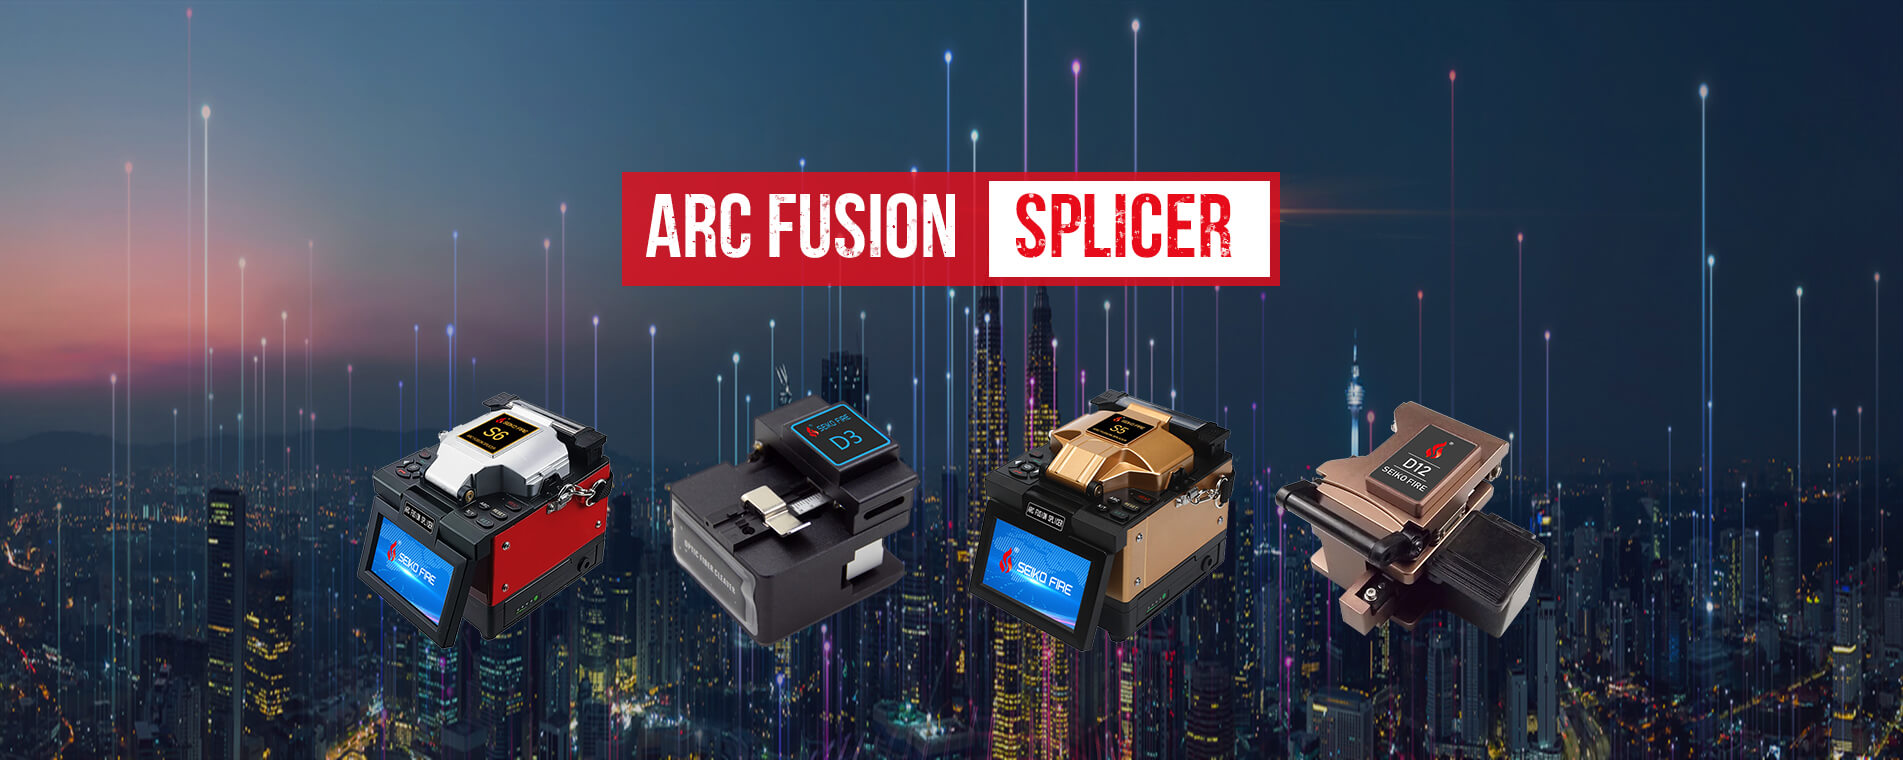 ARC Fusion Splicer